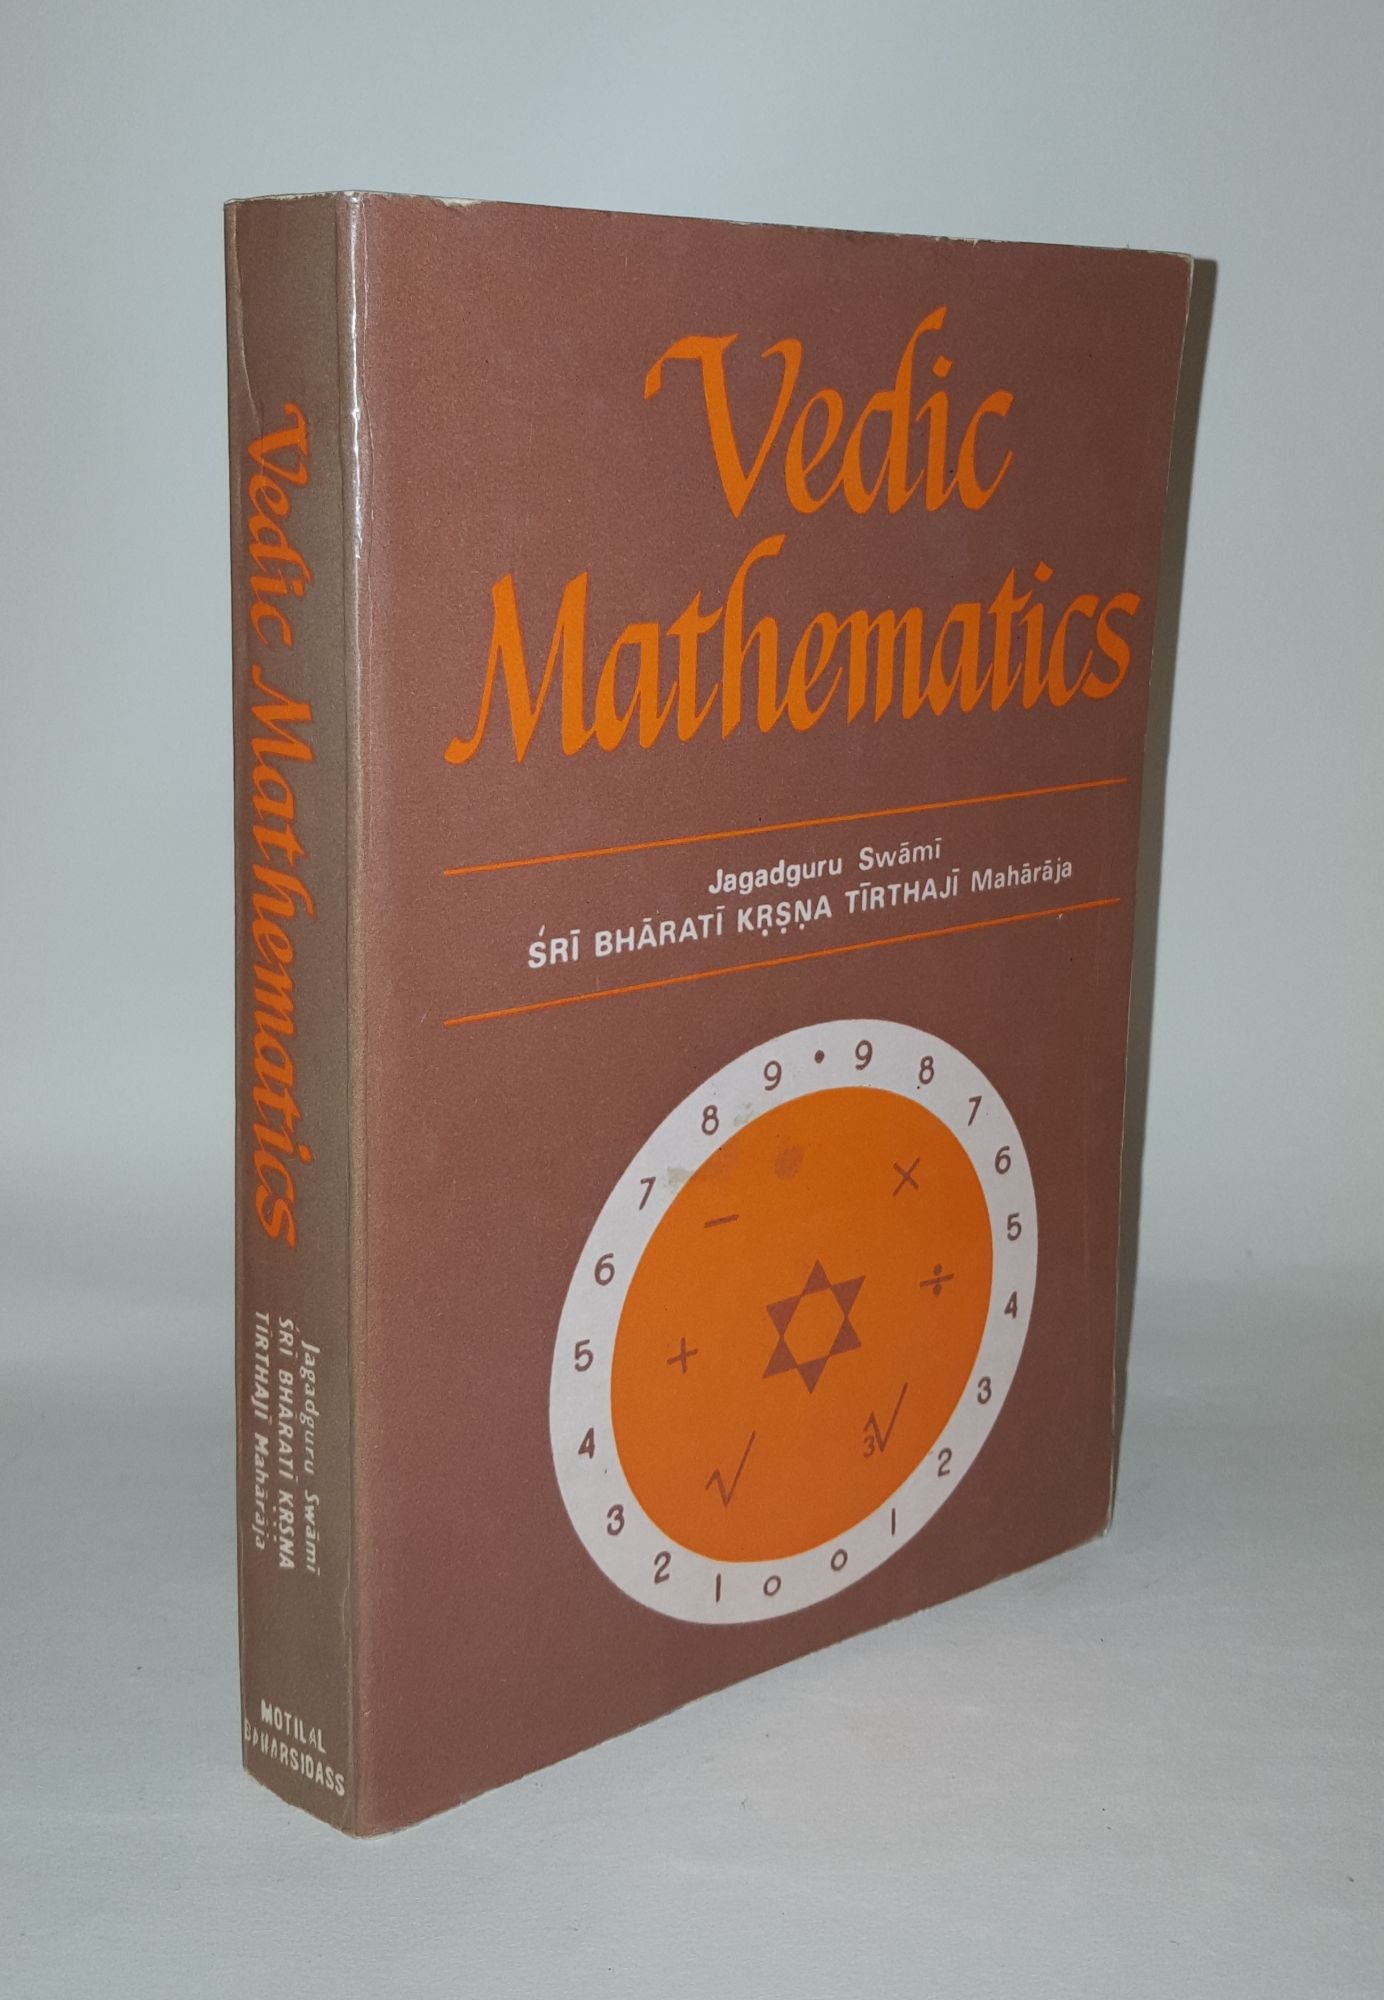 JAGADGURU SWAMI - Vedic Mathematics or Sixteen Simple Mathematical Formulae from the Vedas